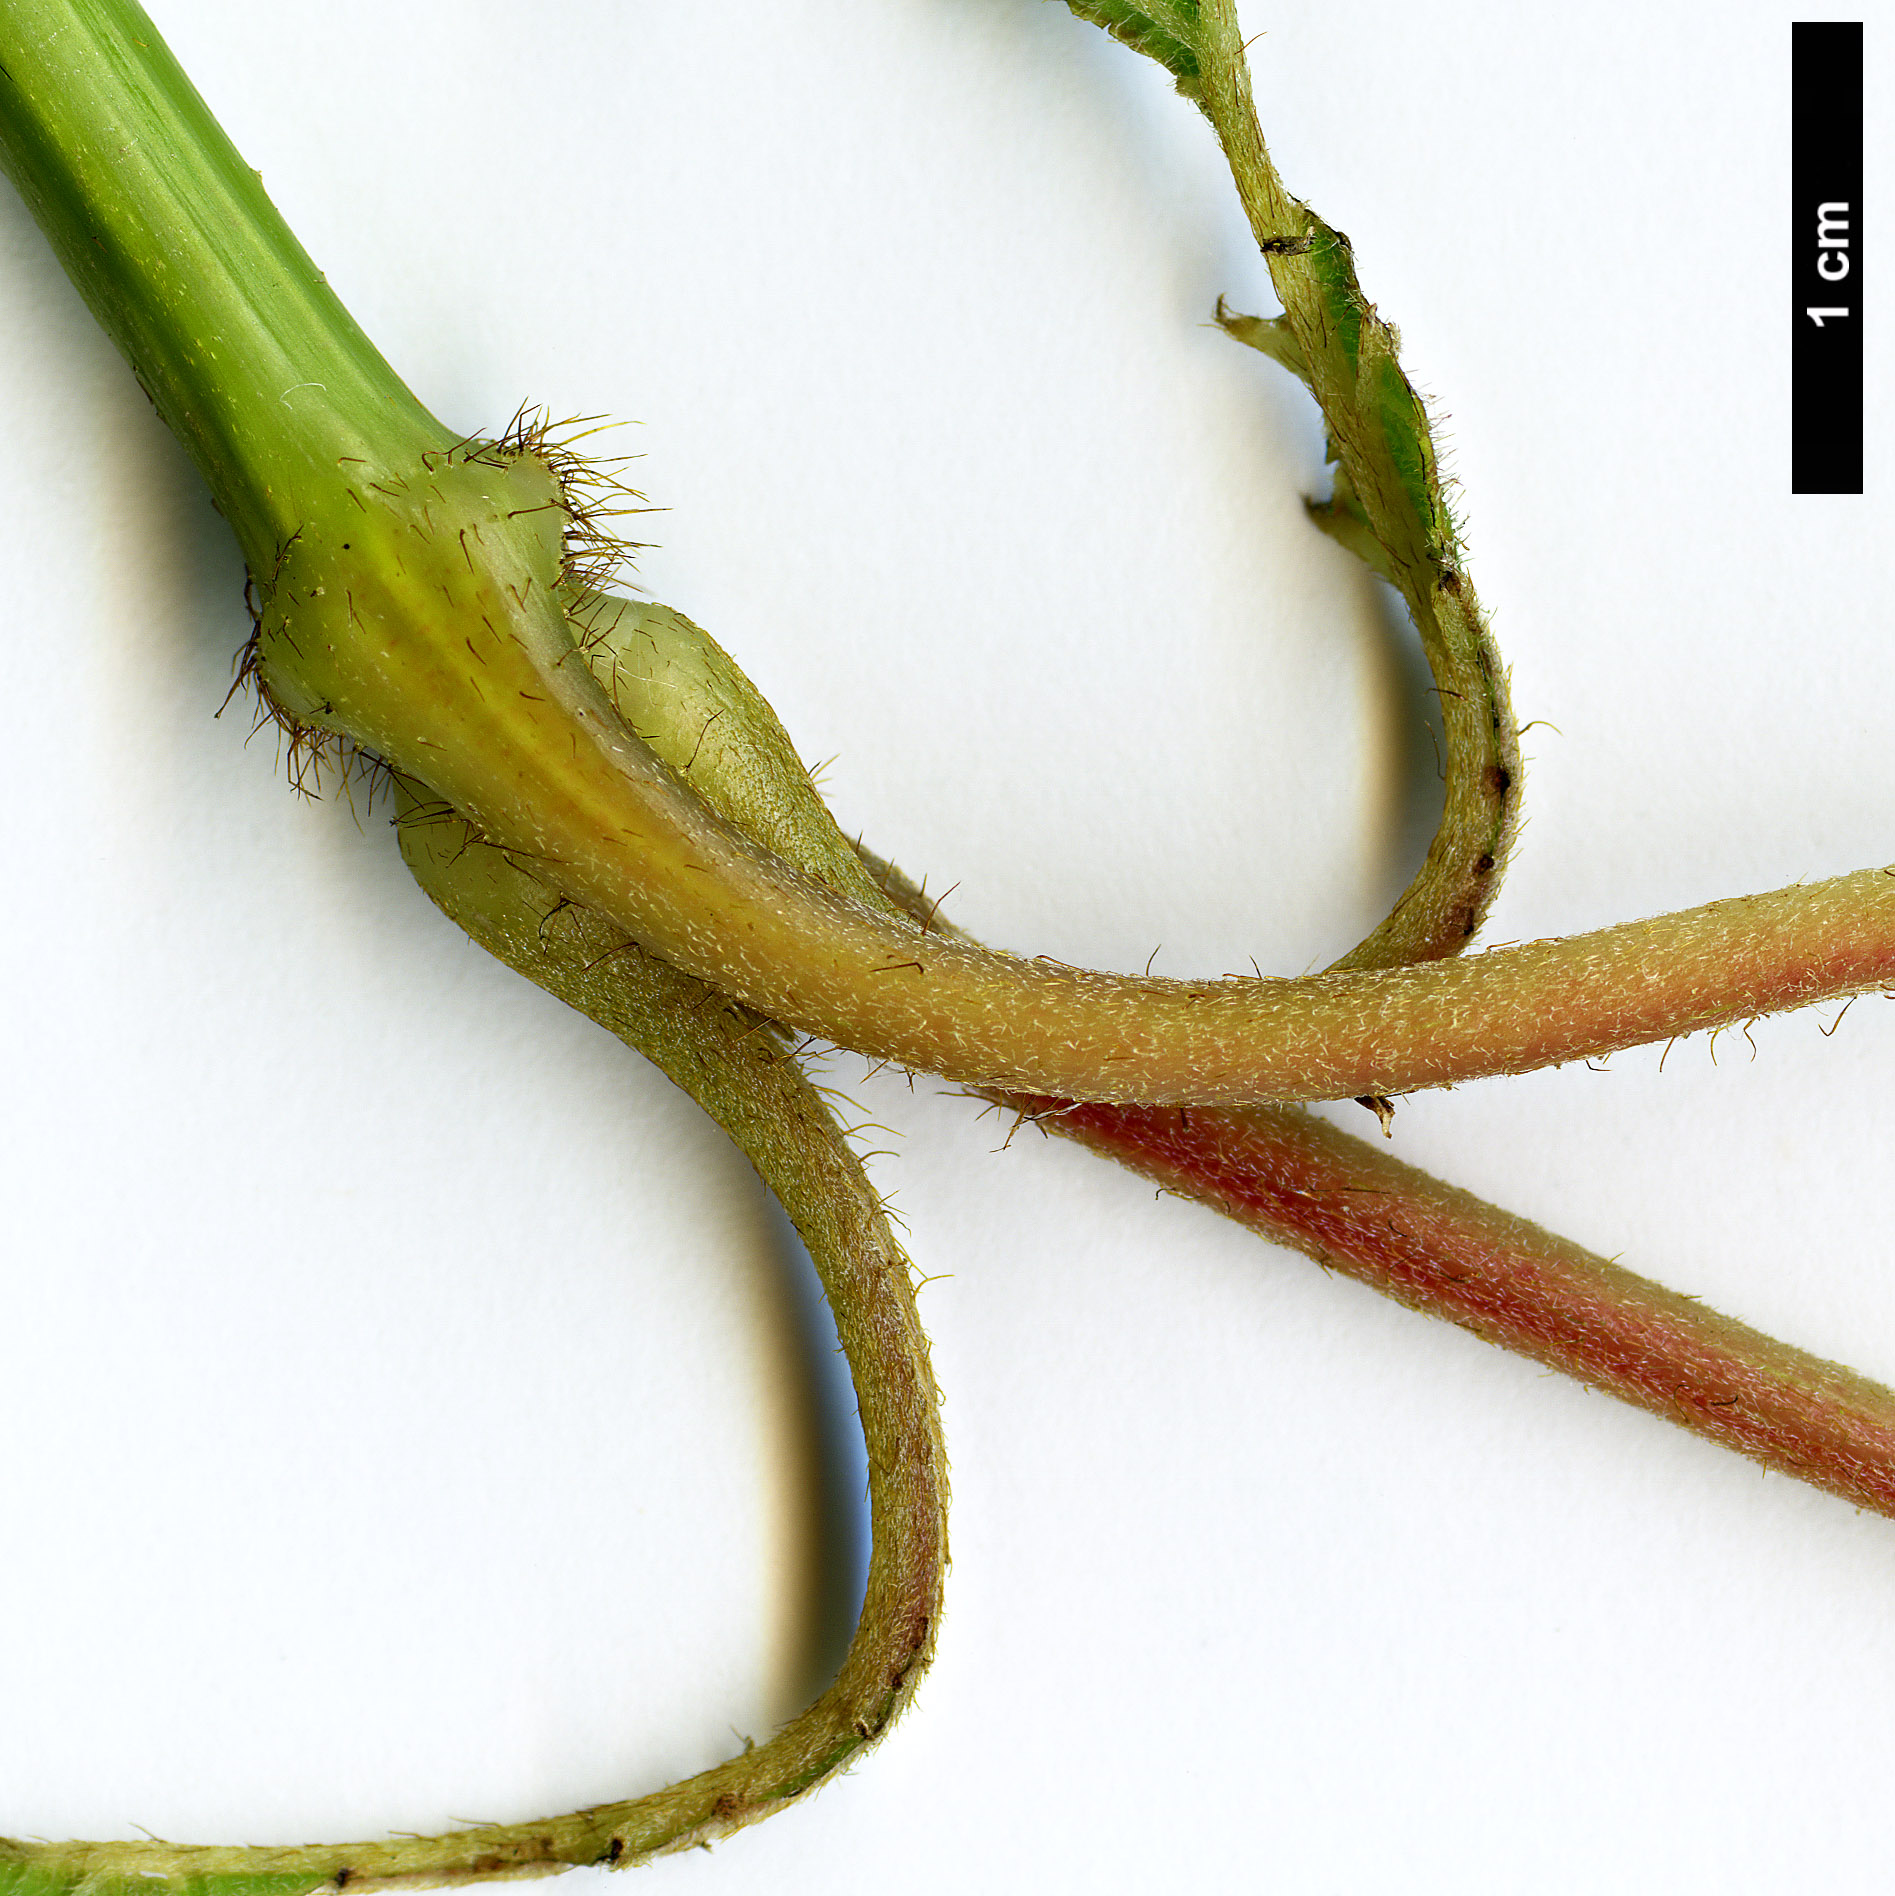 High resolution image: Family: Hydrangeaceae - Genus: Hydrangea - Taxon: longipes - SpeciesSub: var. fulvescens